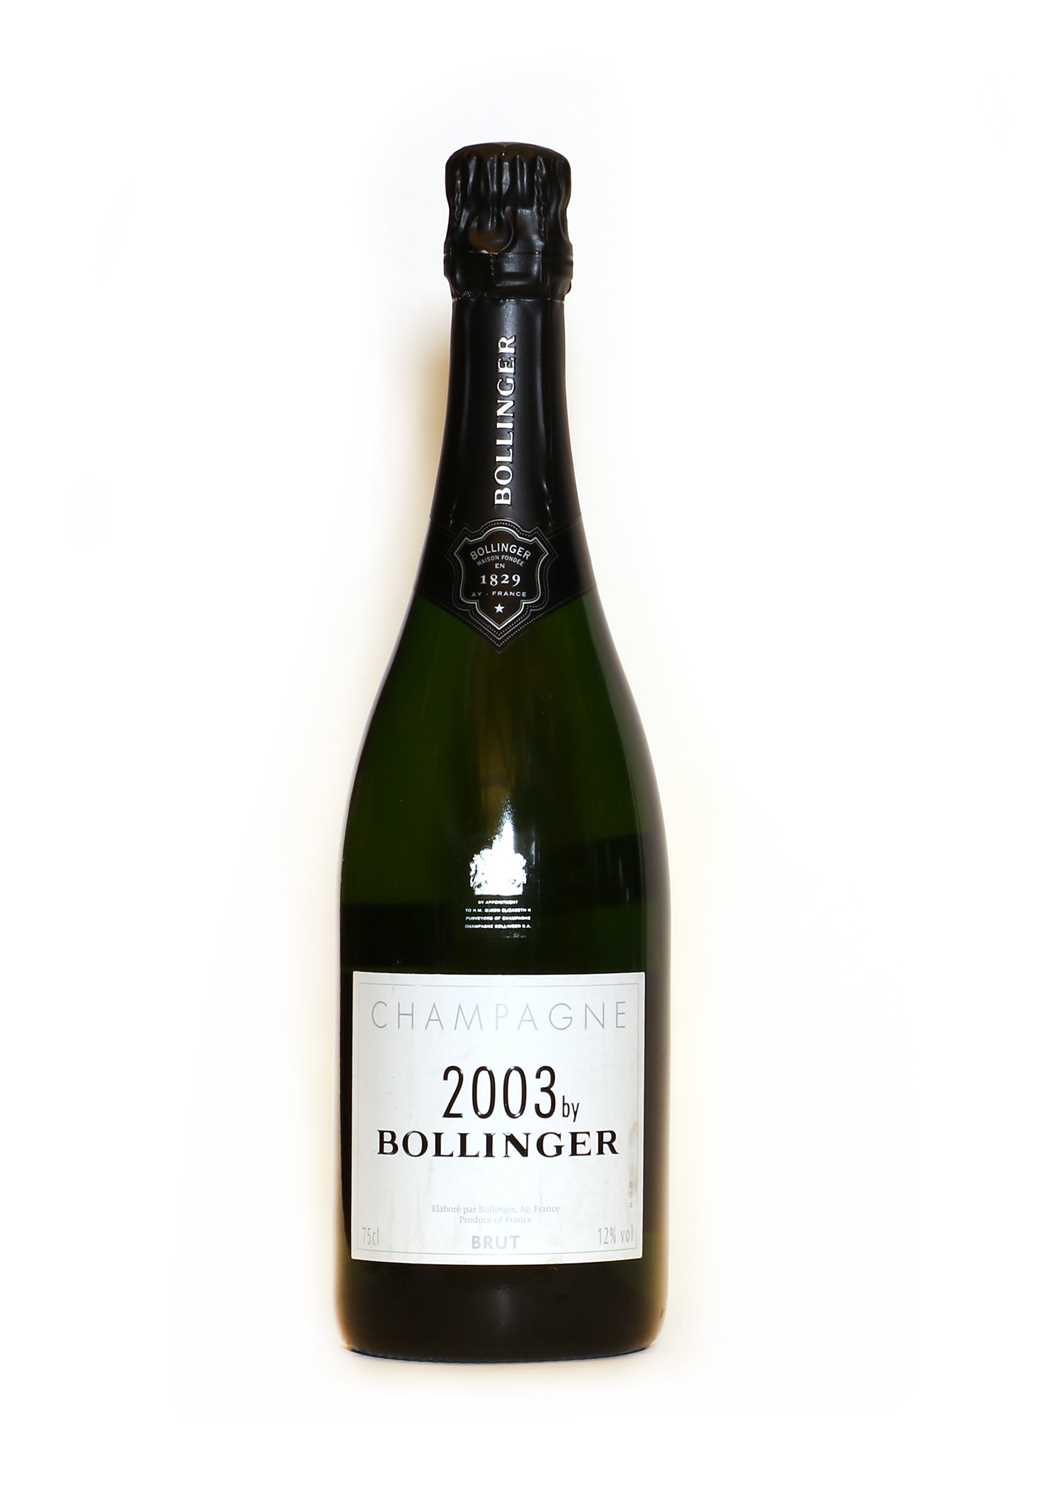 Lot 15 - Bollinger, 2003 by Bollinger, Ay, 2003, one bottle